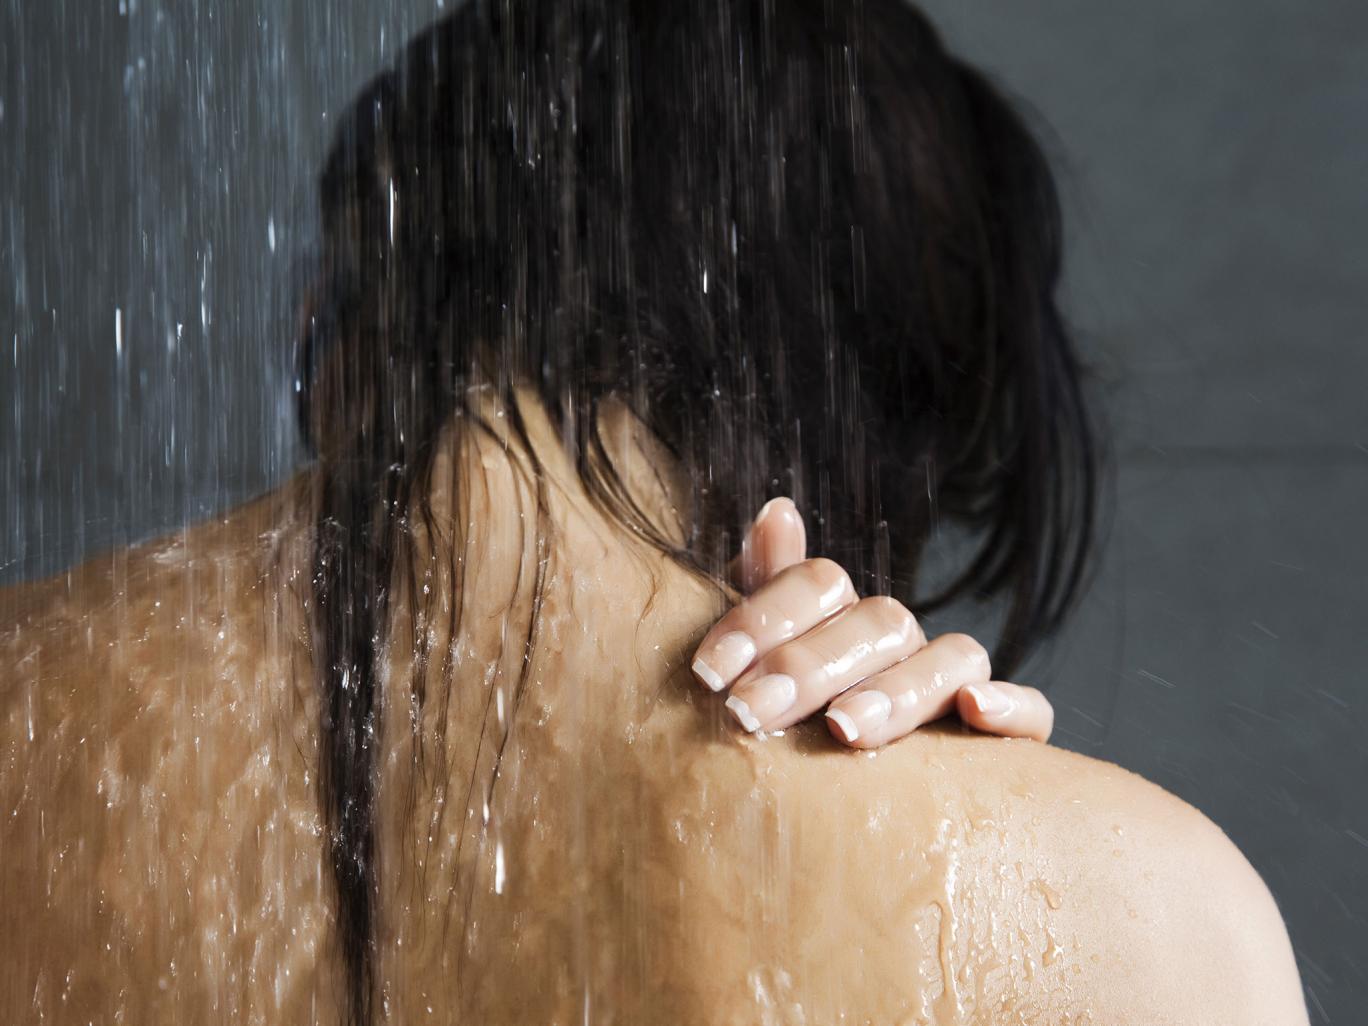 Wanita di negara ini  jarang mandi setiap hari, waduh!